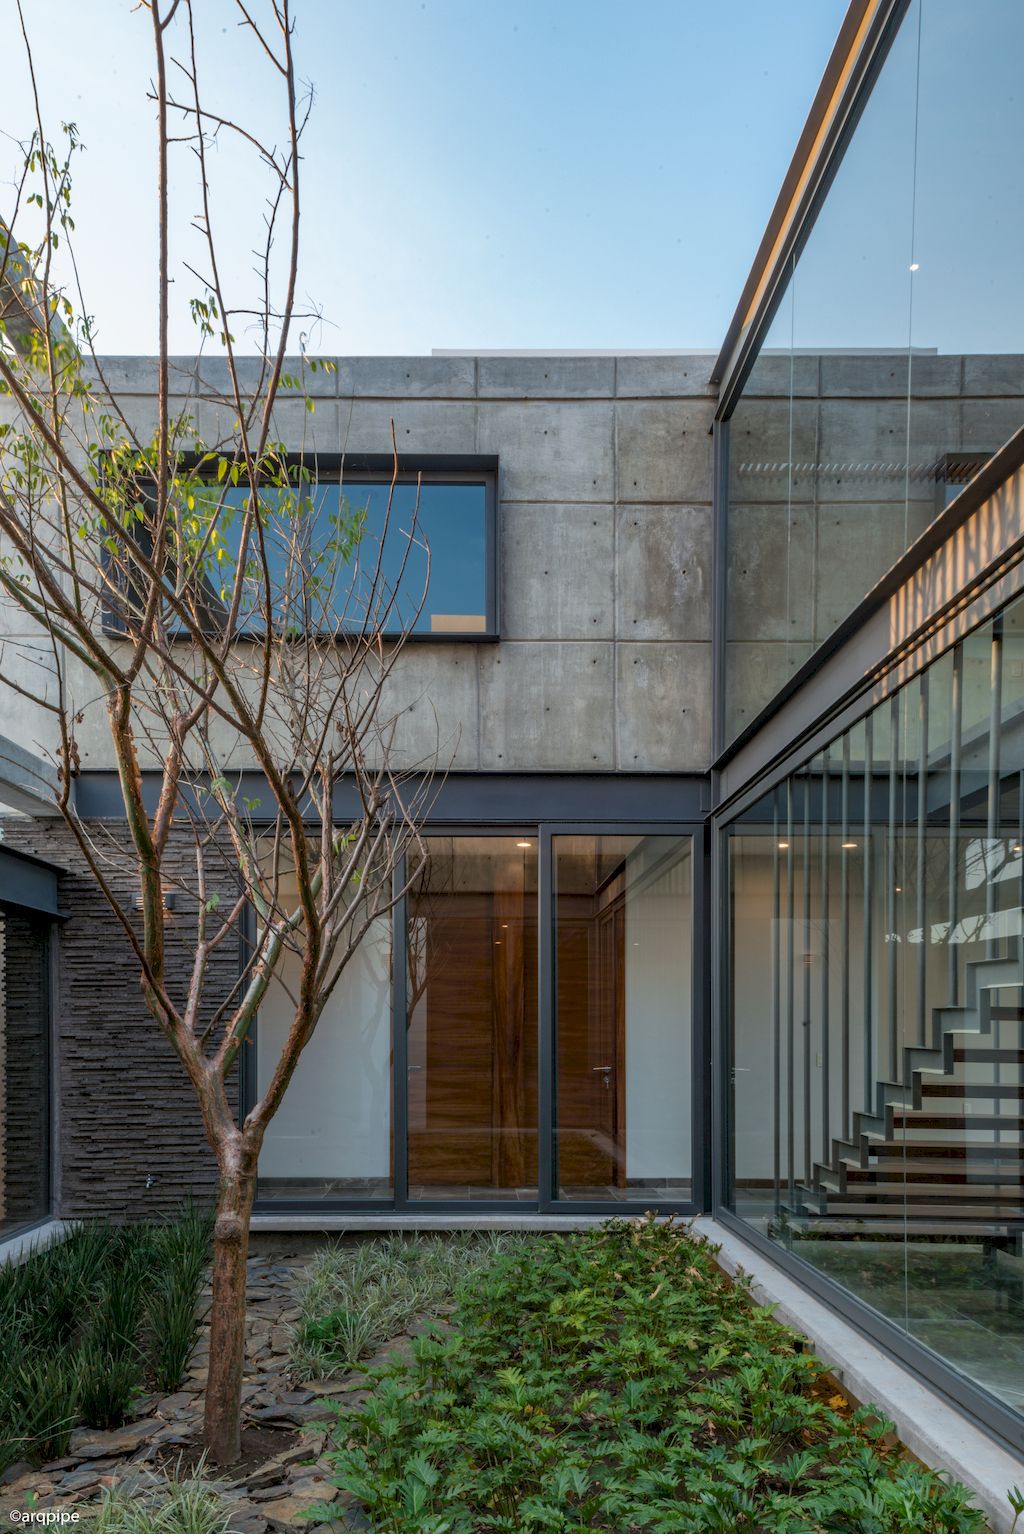 Casa-SEKIZ-take-form-of-concrete-large-set-dice-by-Di-Frenna-Arquitectos-4